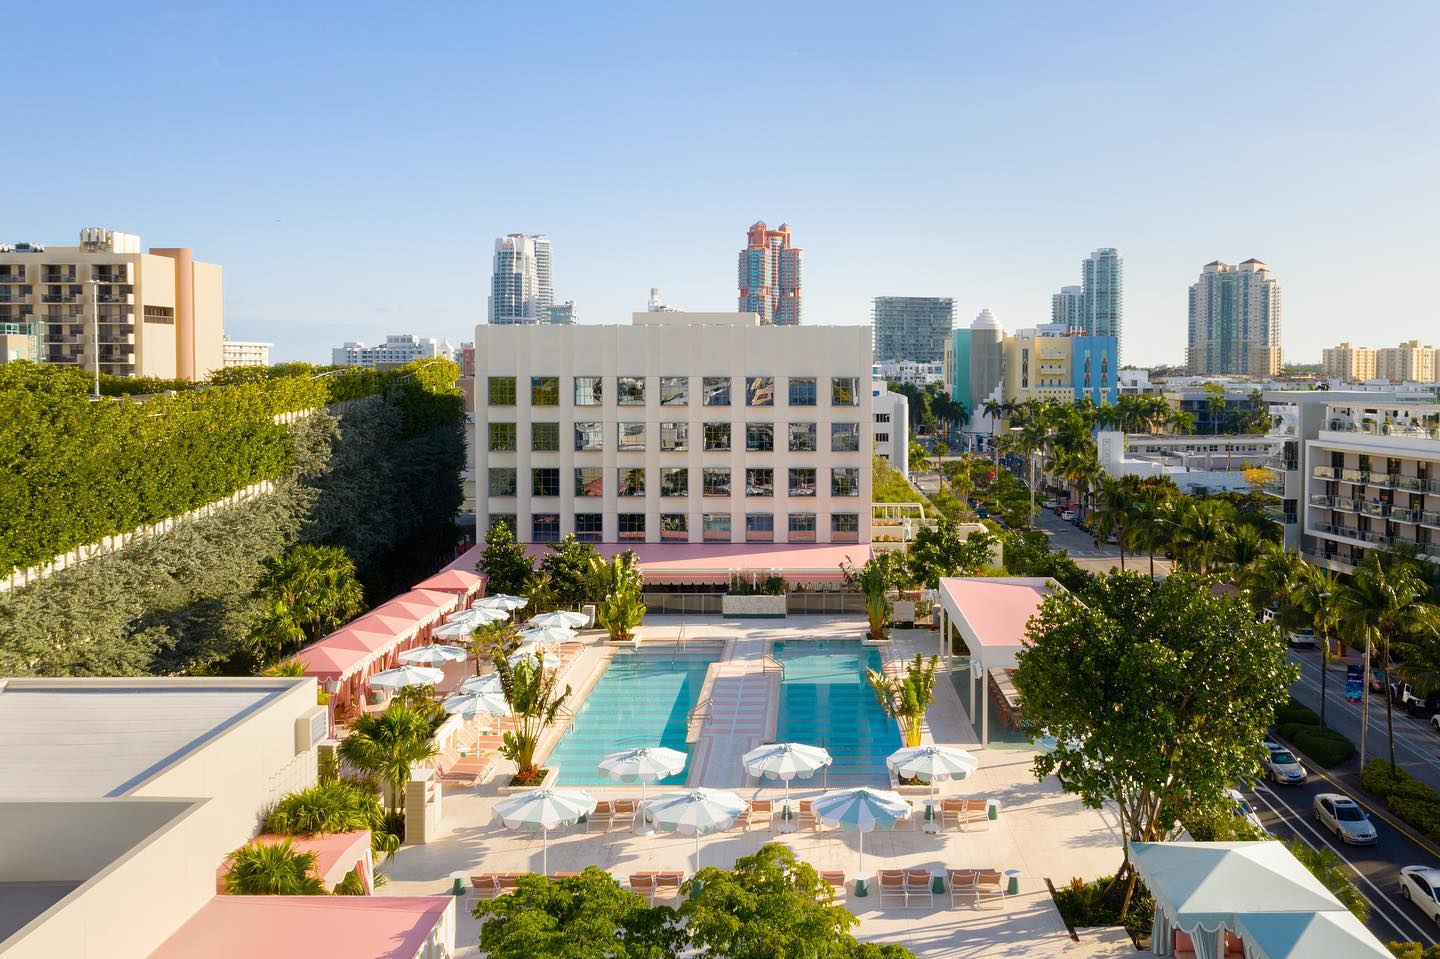 The Goodtime Hotel à Miami, Floride, USA © Goodtime